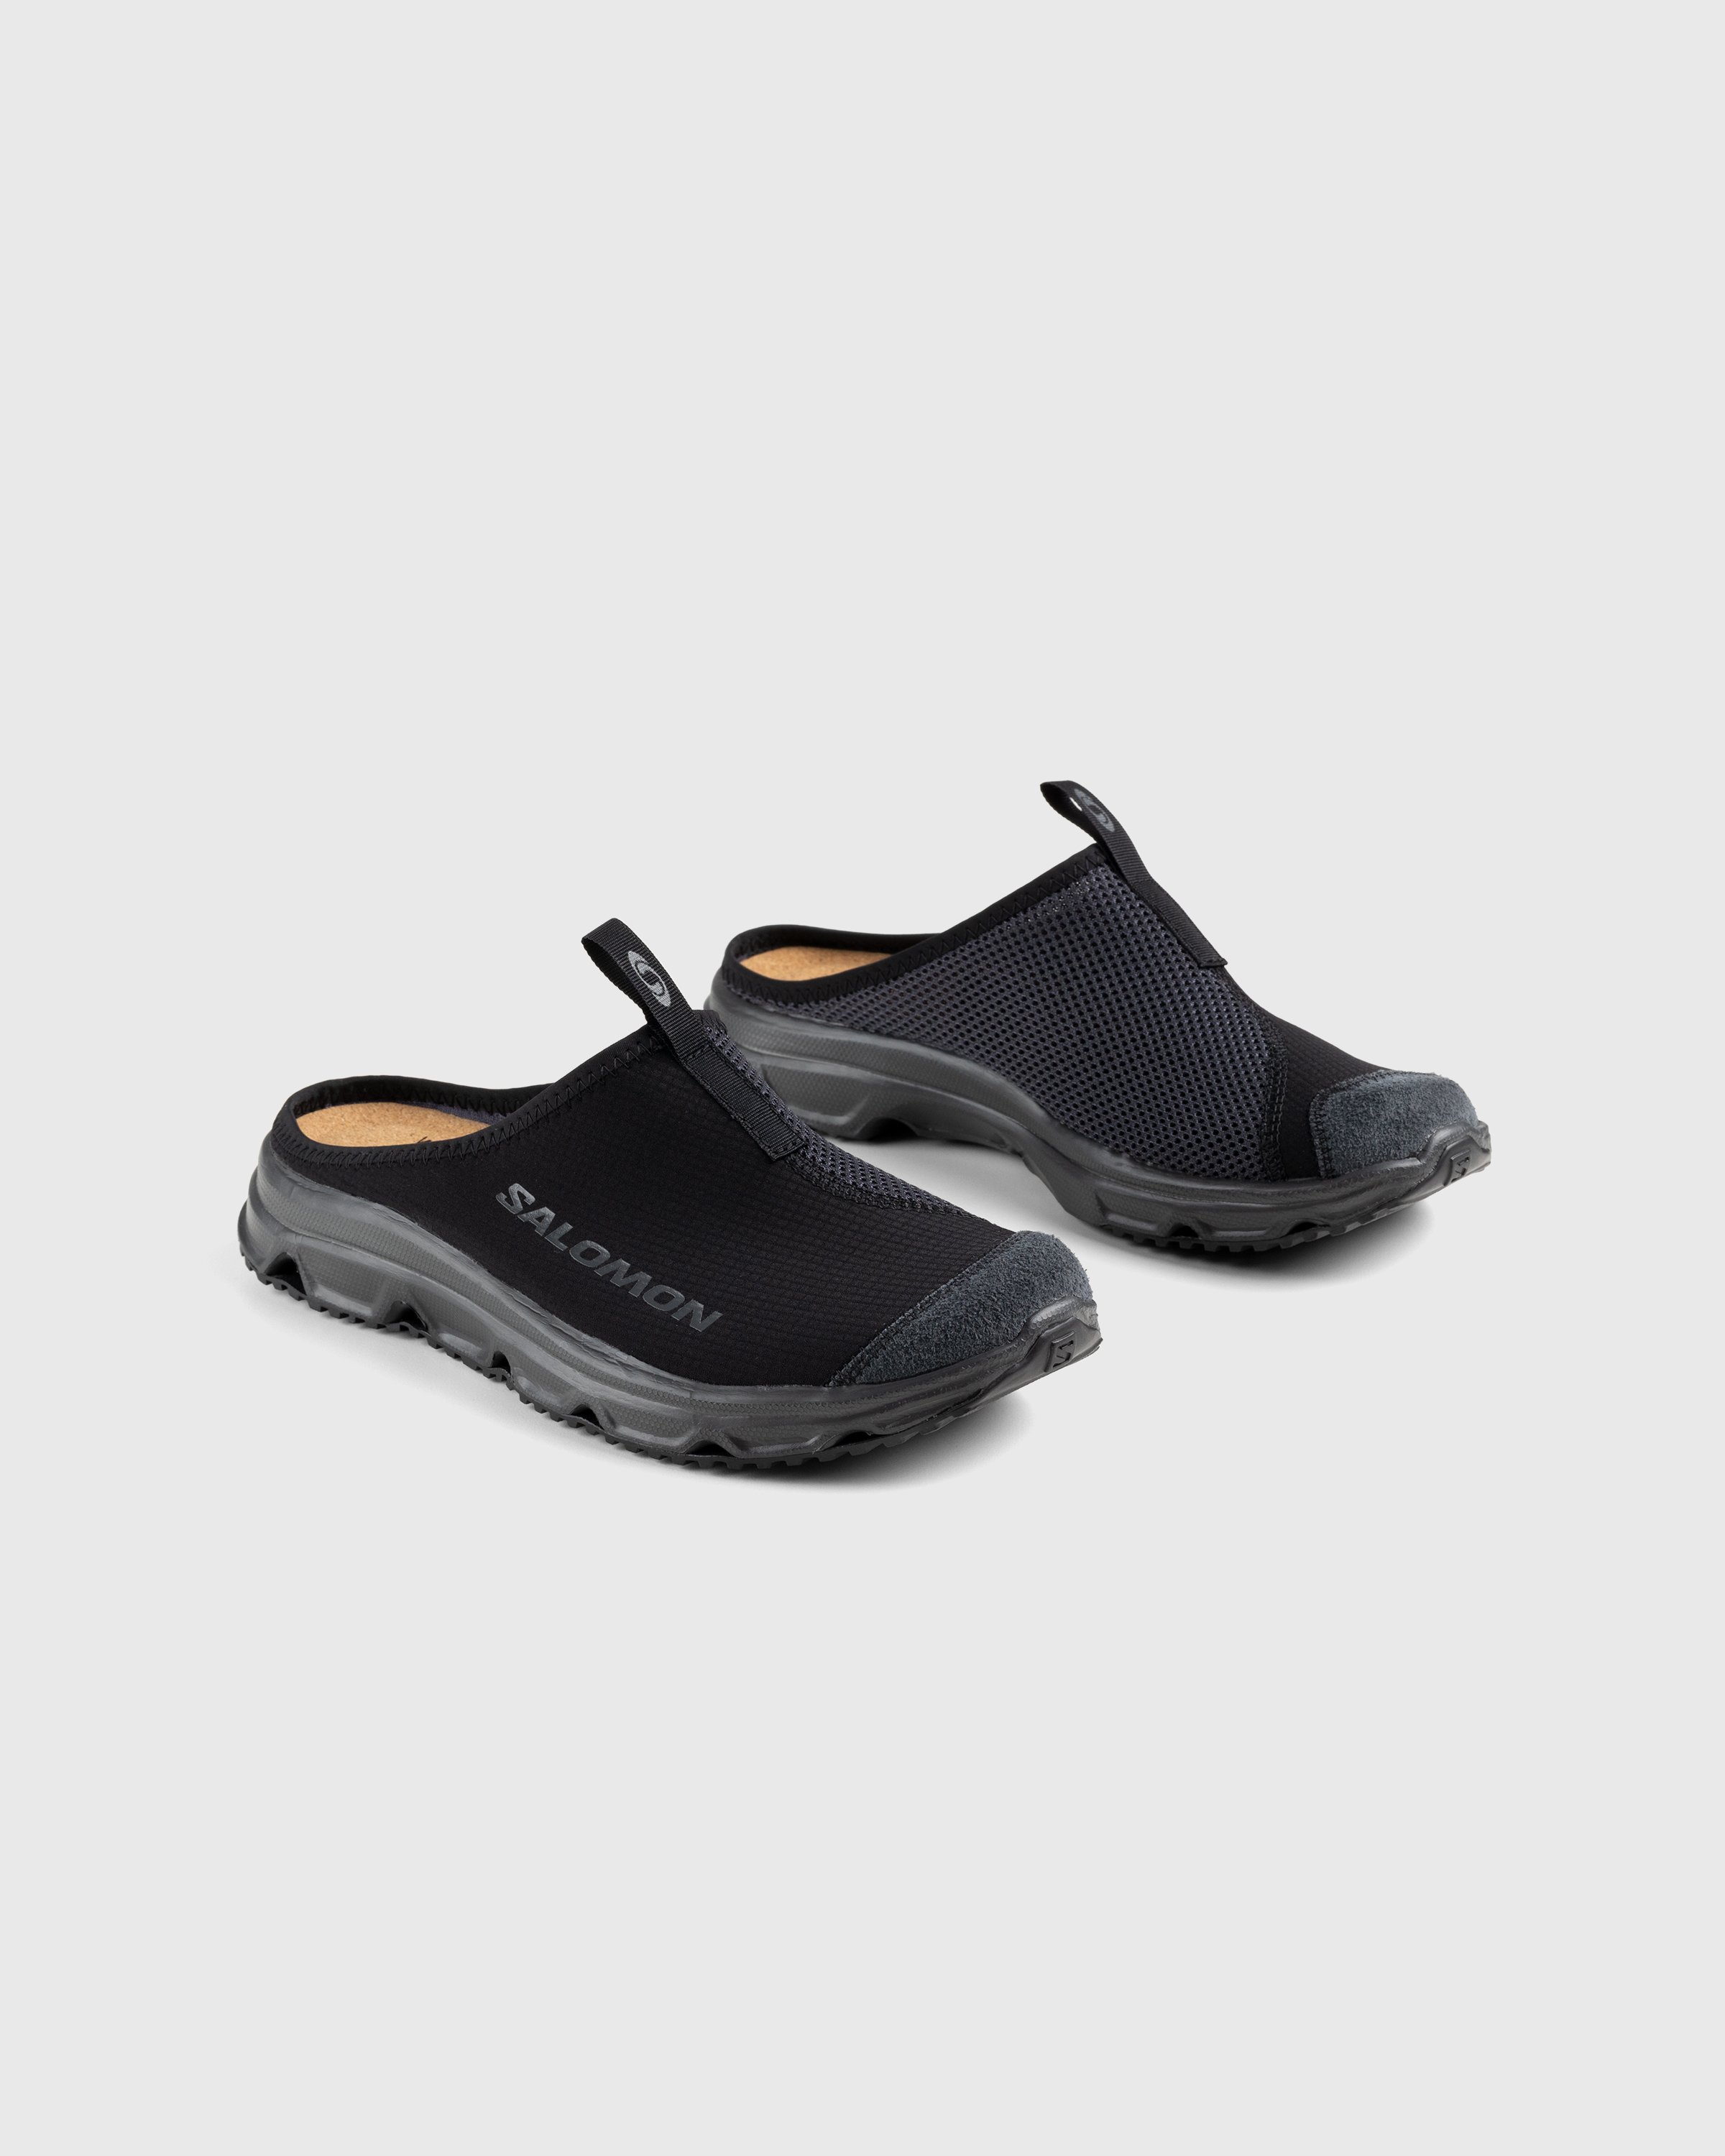 Salomon - RX Slide 3.0 Black/Phantom/Ebony - Footwear - Black - Image 3